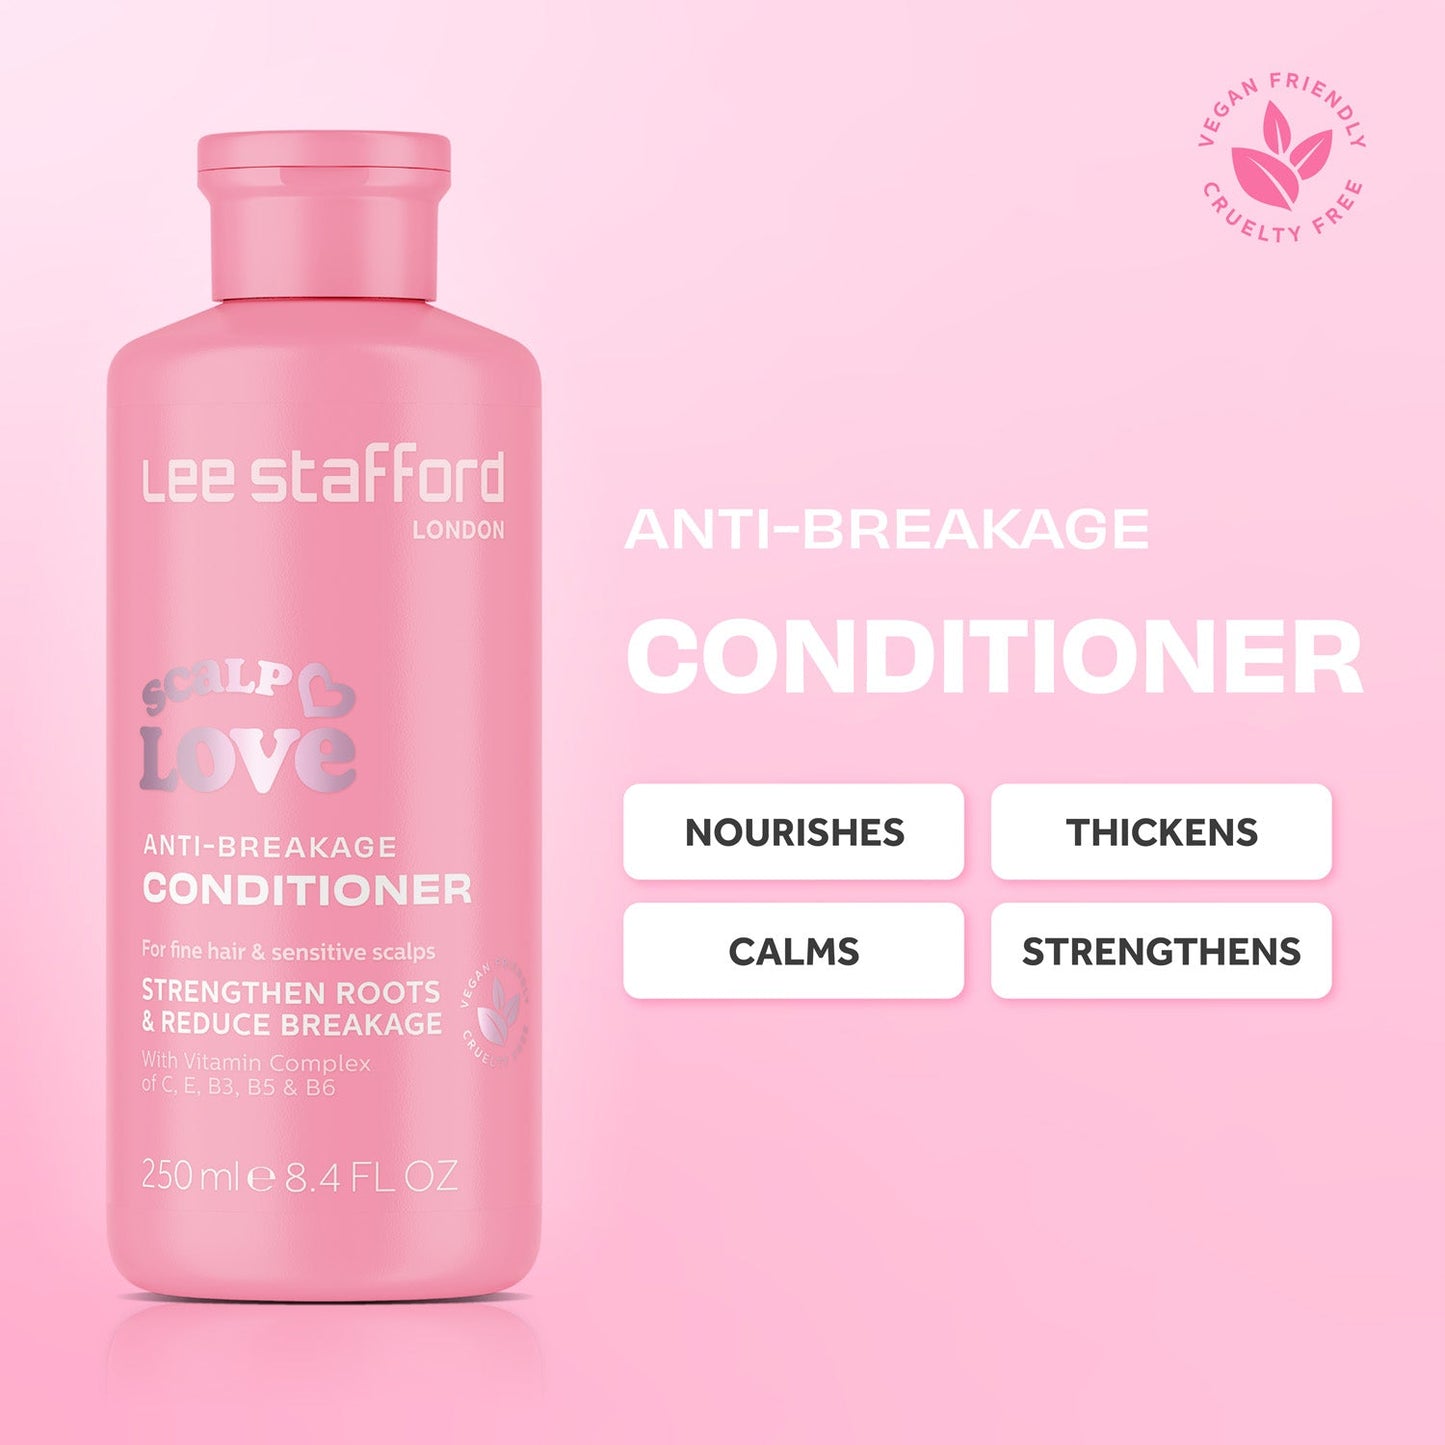 Scalp Love Anti-Breakage Conditioner